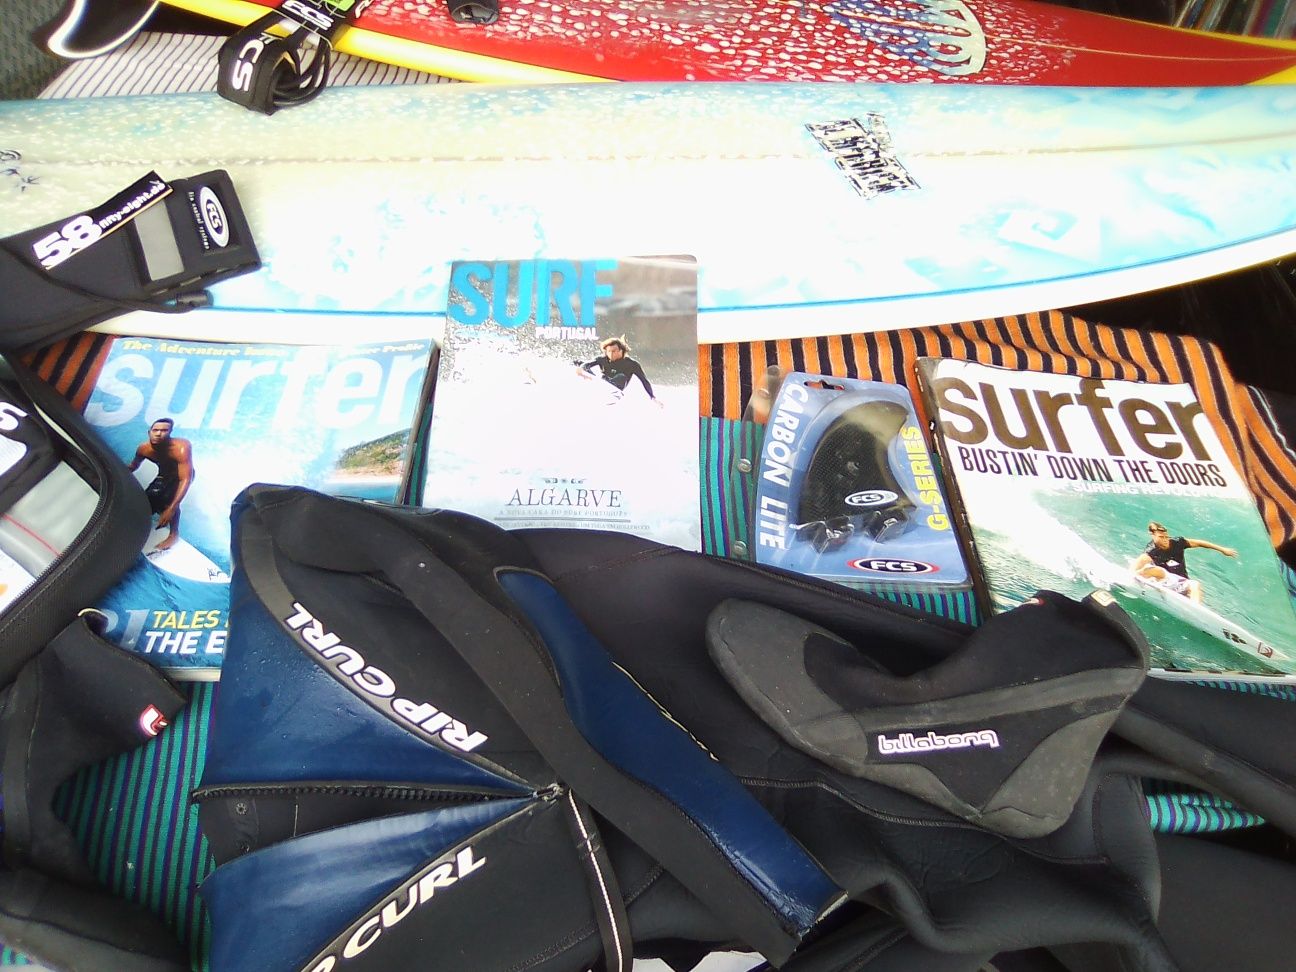 SURF, Material, pranchas,fatos, finos, etc